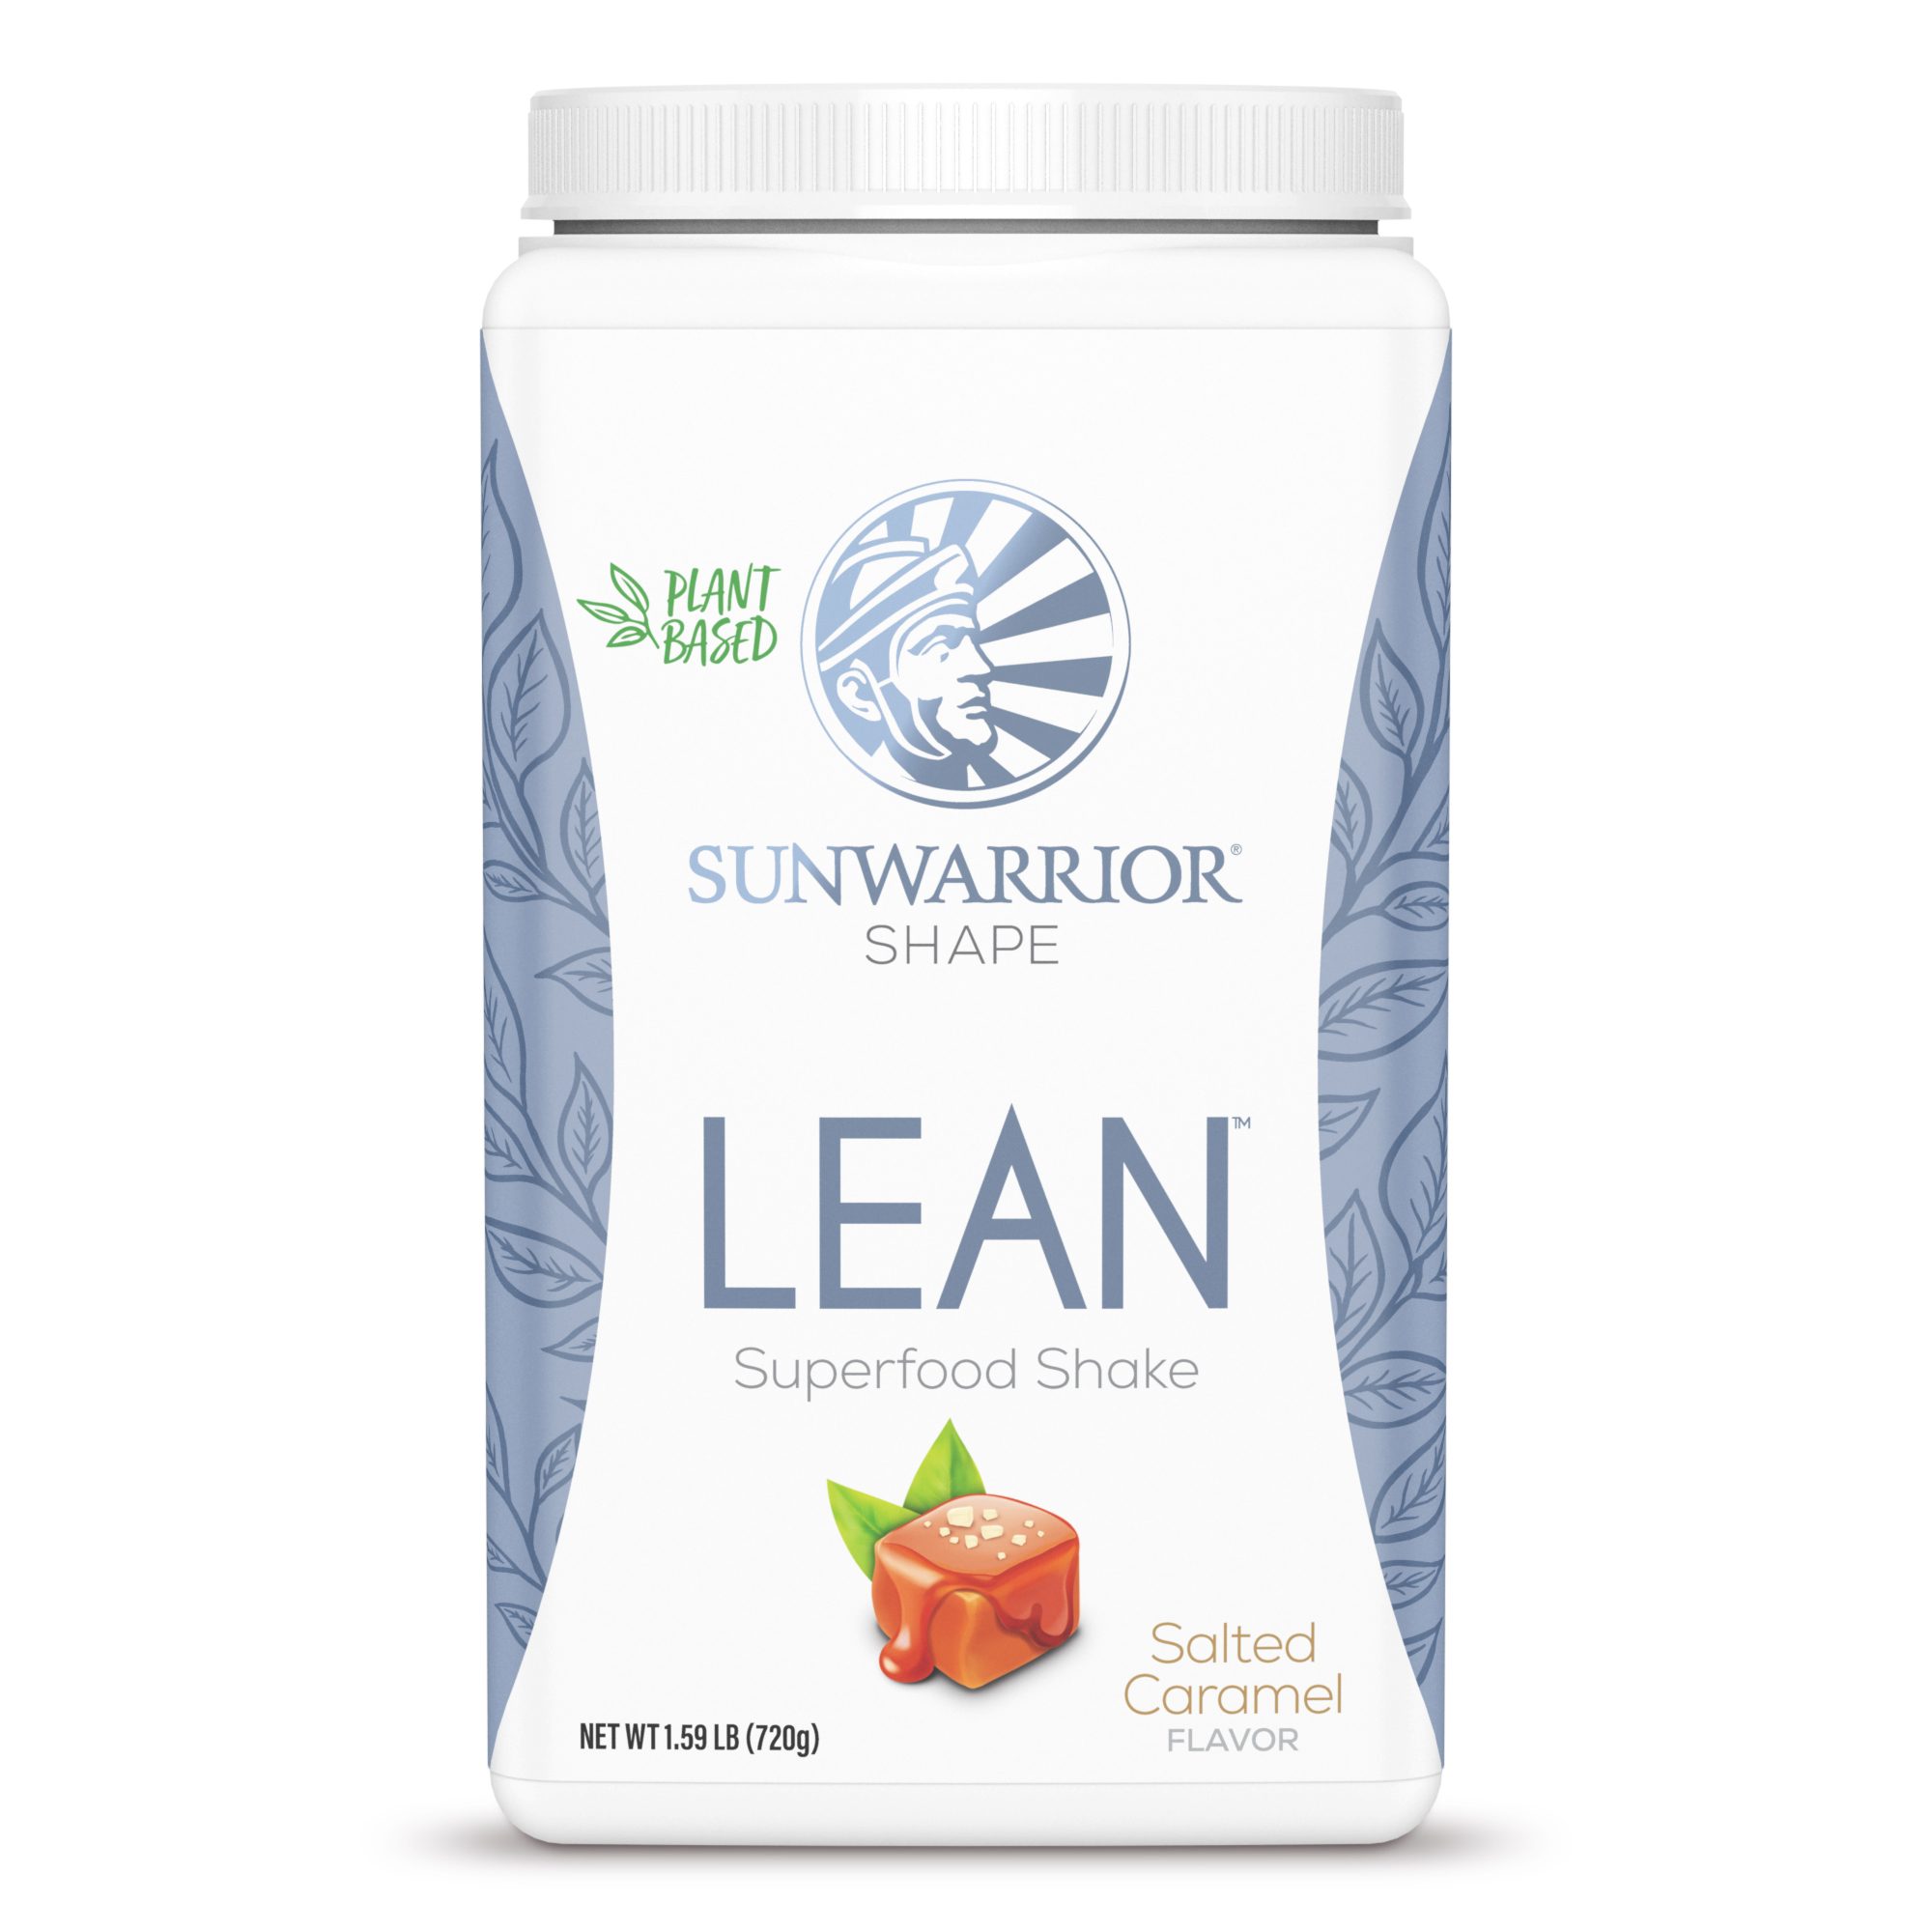 Sunwarrior Shape – Lean Superfood Shake – Salted Caramel – 720g (replacing Lean Meal Illumin8)